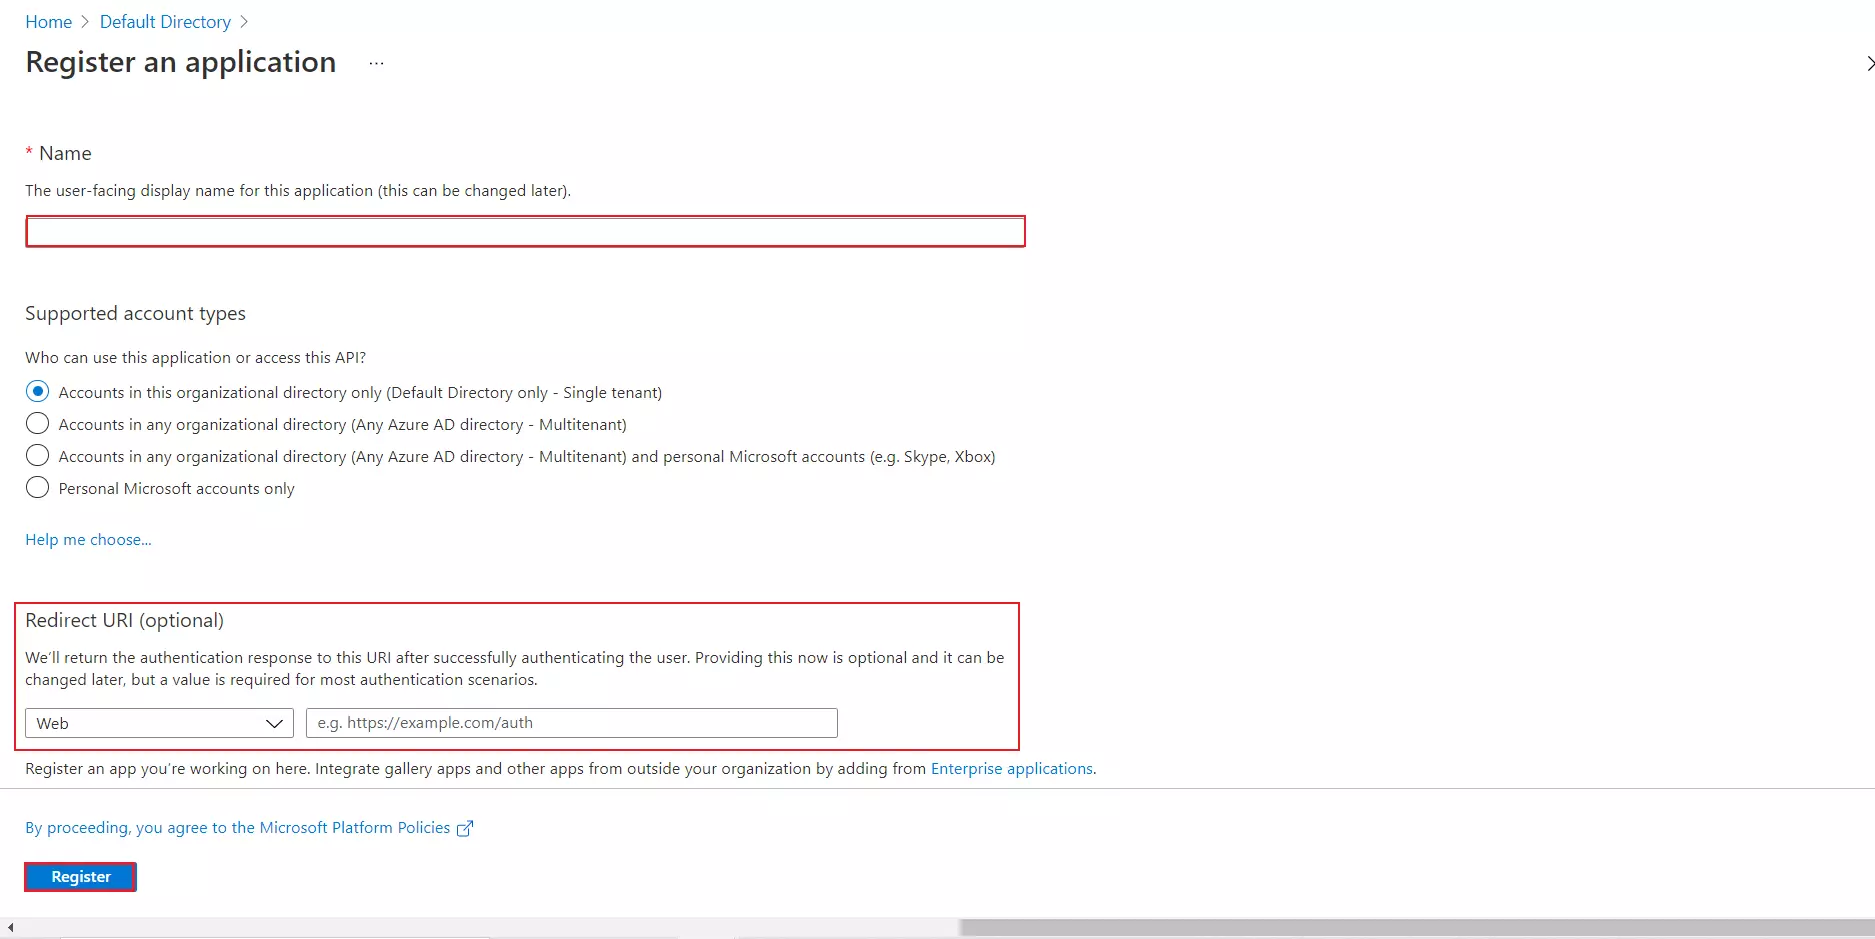 ASP.NET Core SAML Single Sign-On (SSO) using Azure AD (Microsoft Entra ID) as IDP - Application Registration